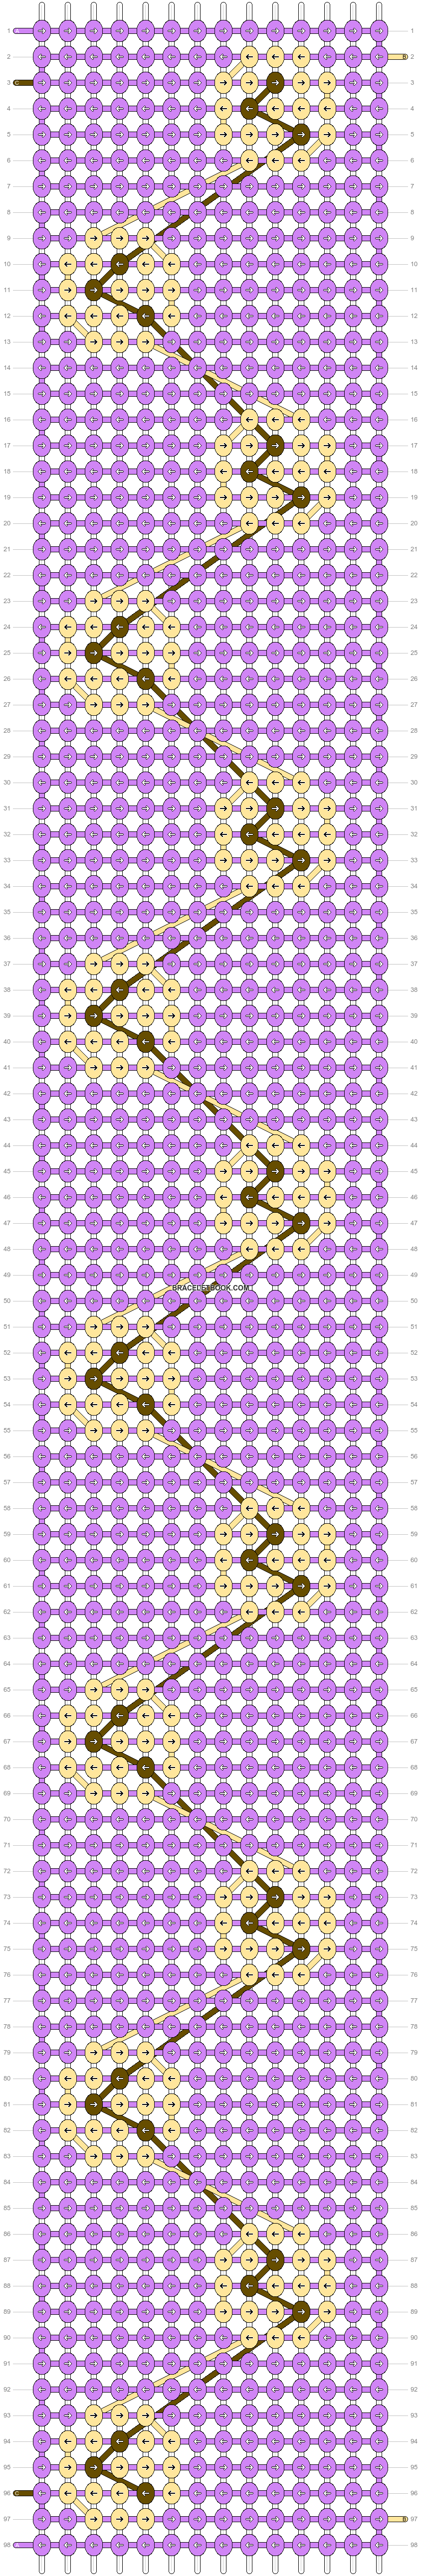 Alpha pattern #36767 variation #37649 pattern